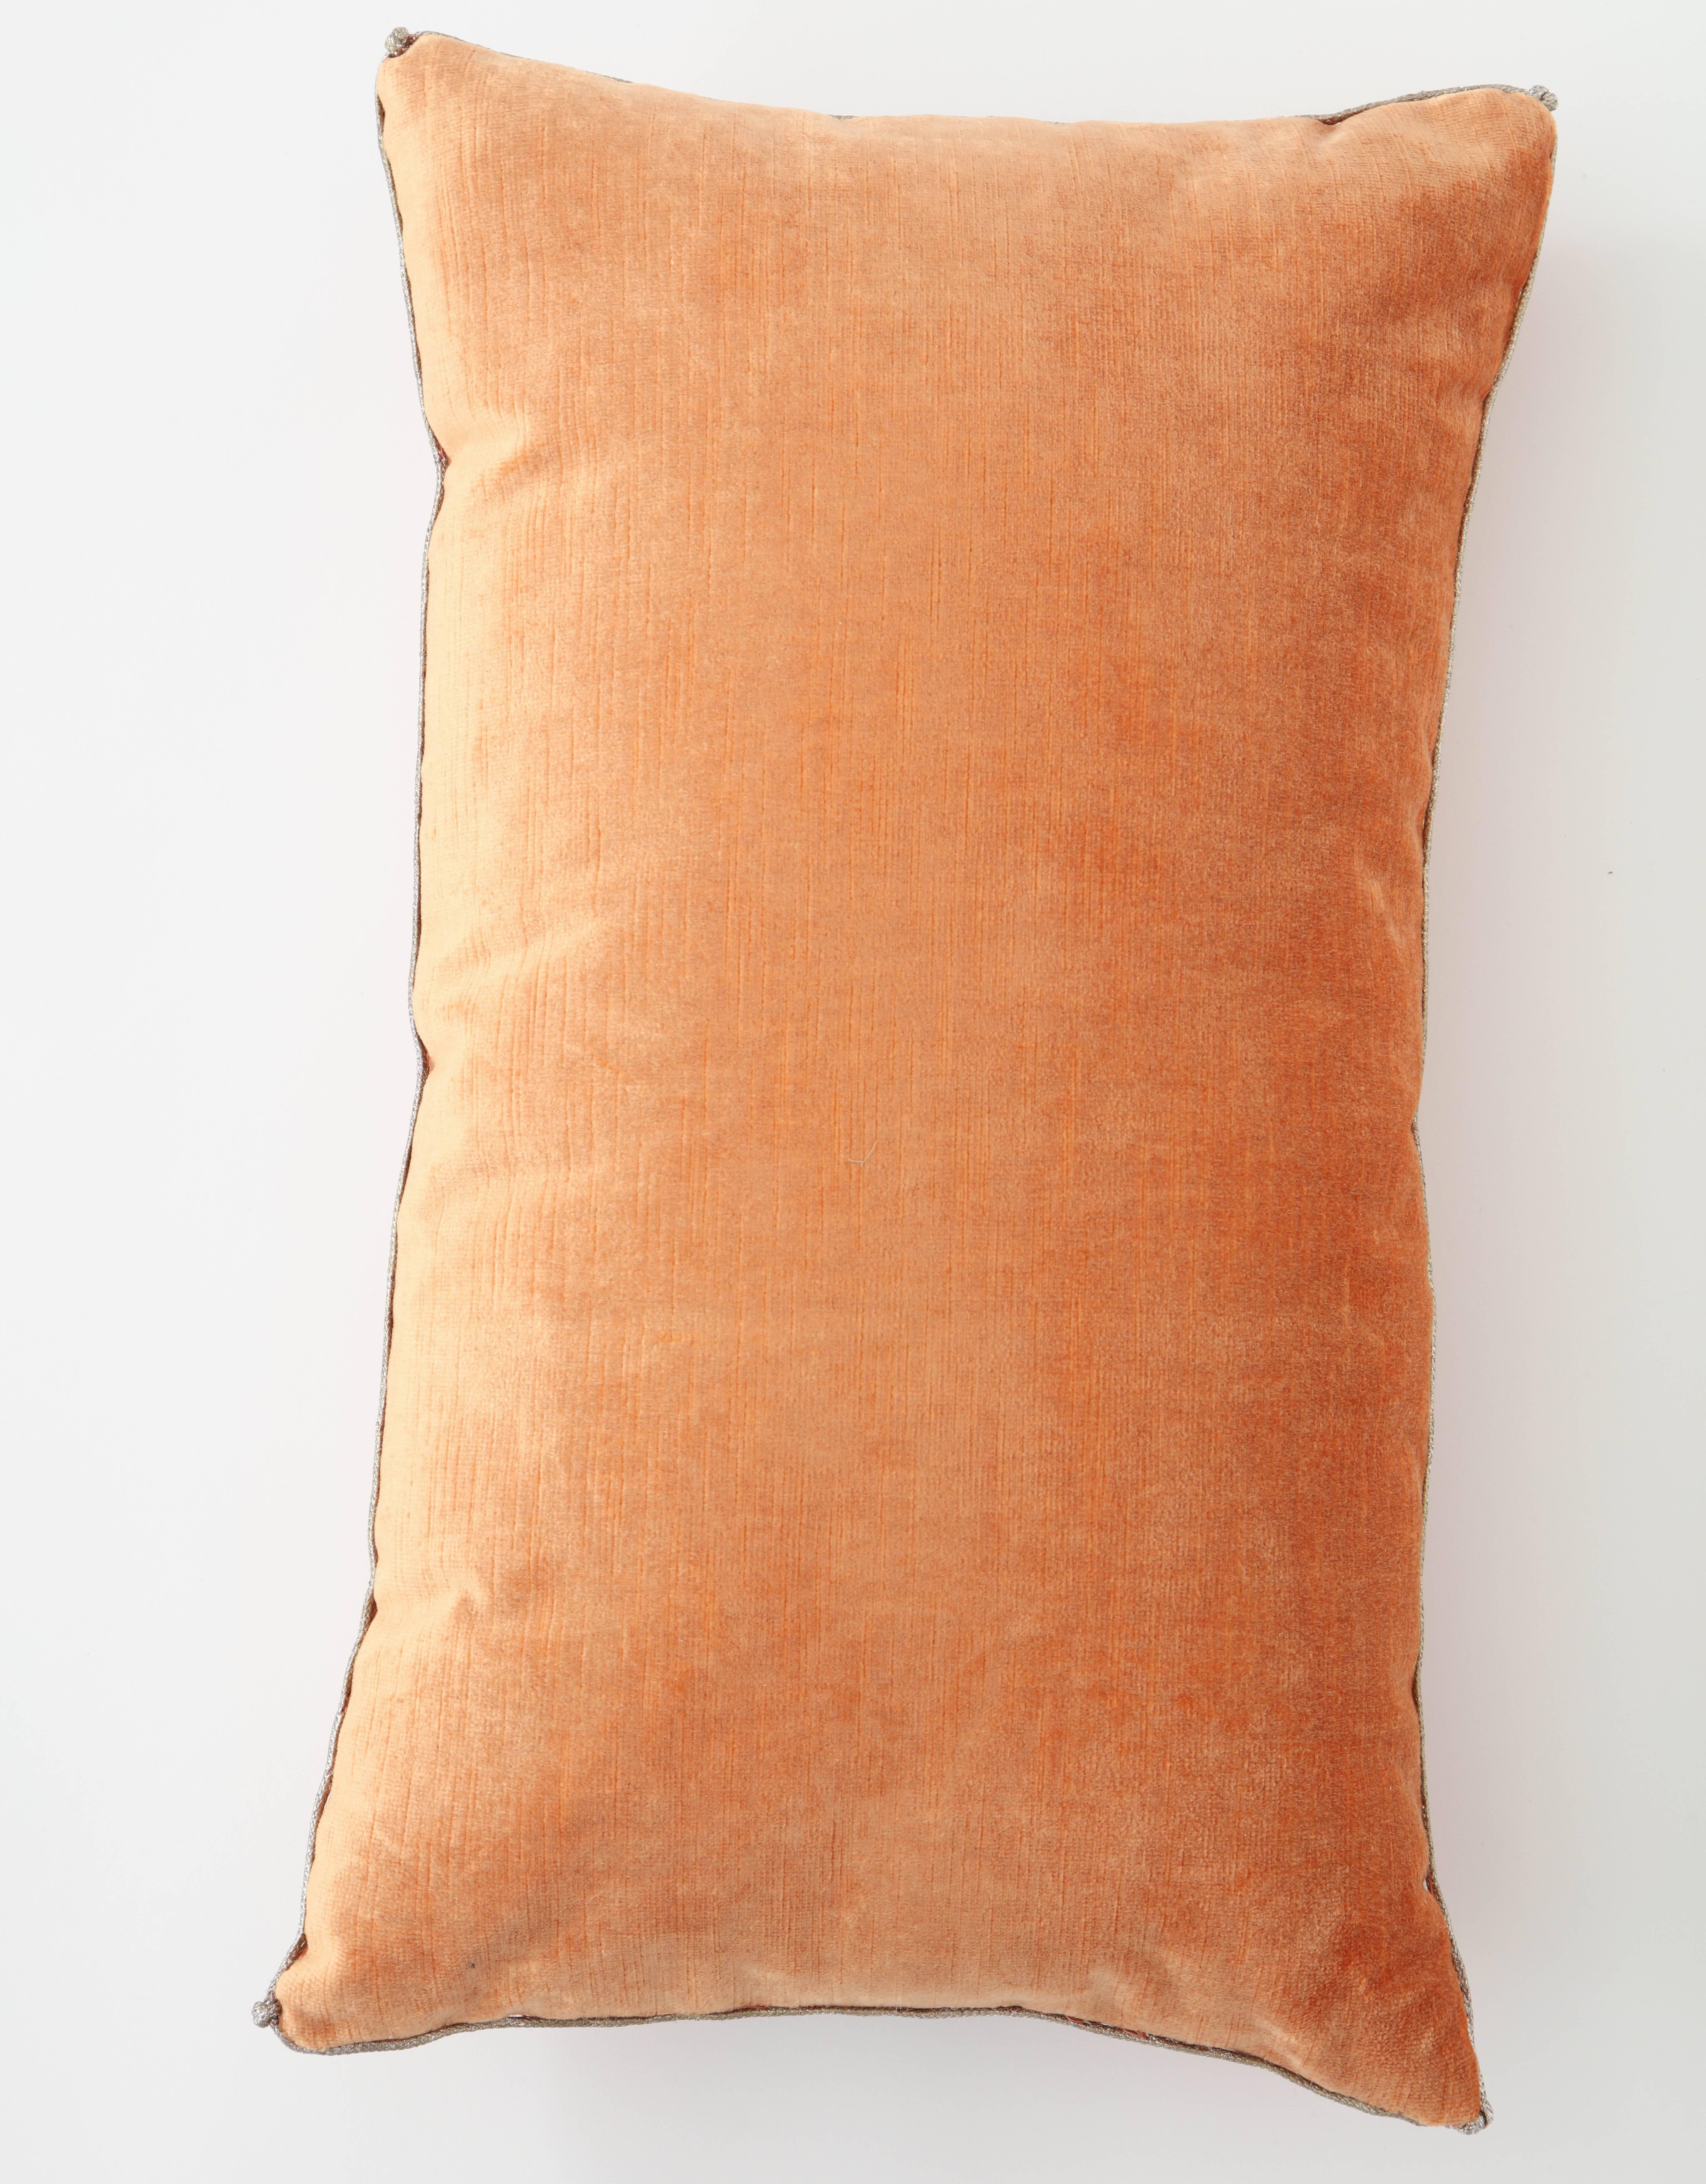 Contemporary Velvet Pillow with Antique Metallic Accents